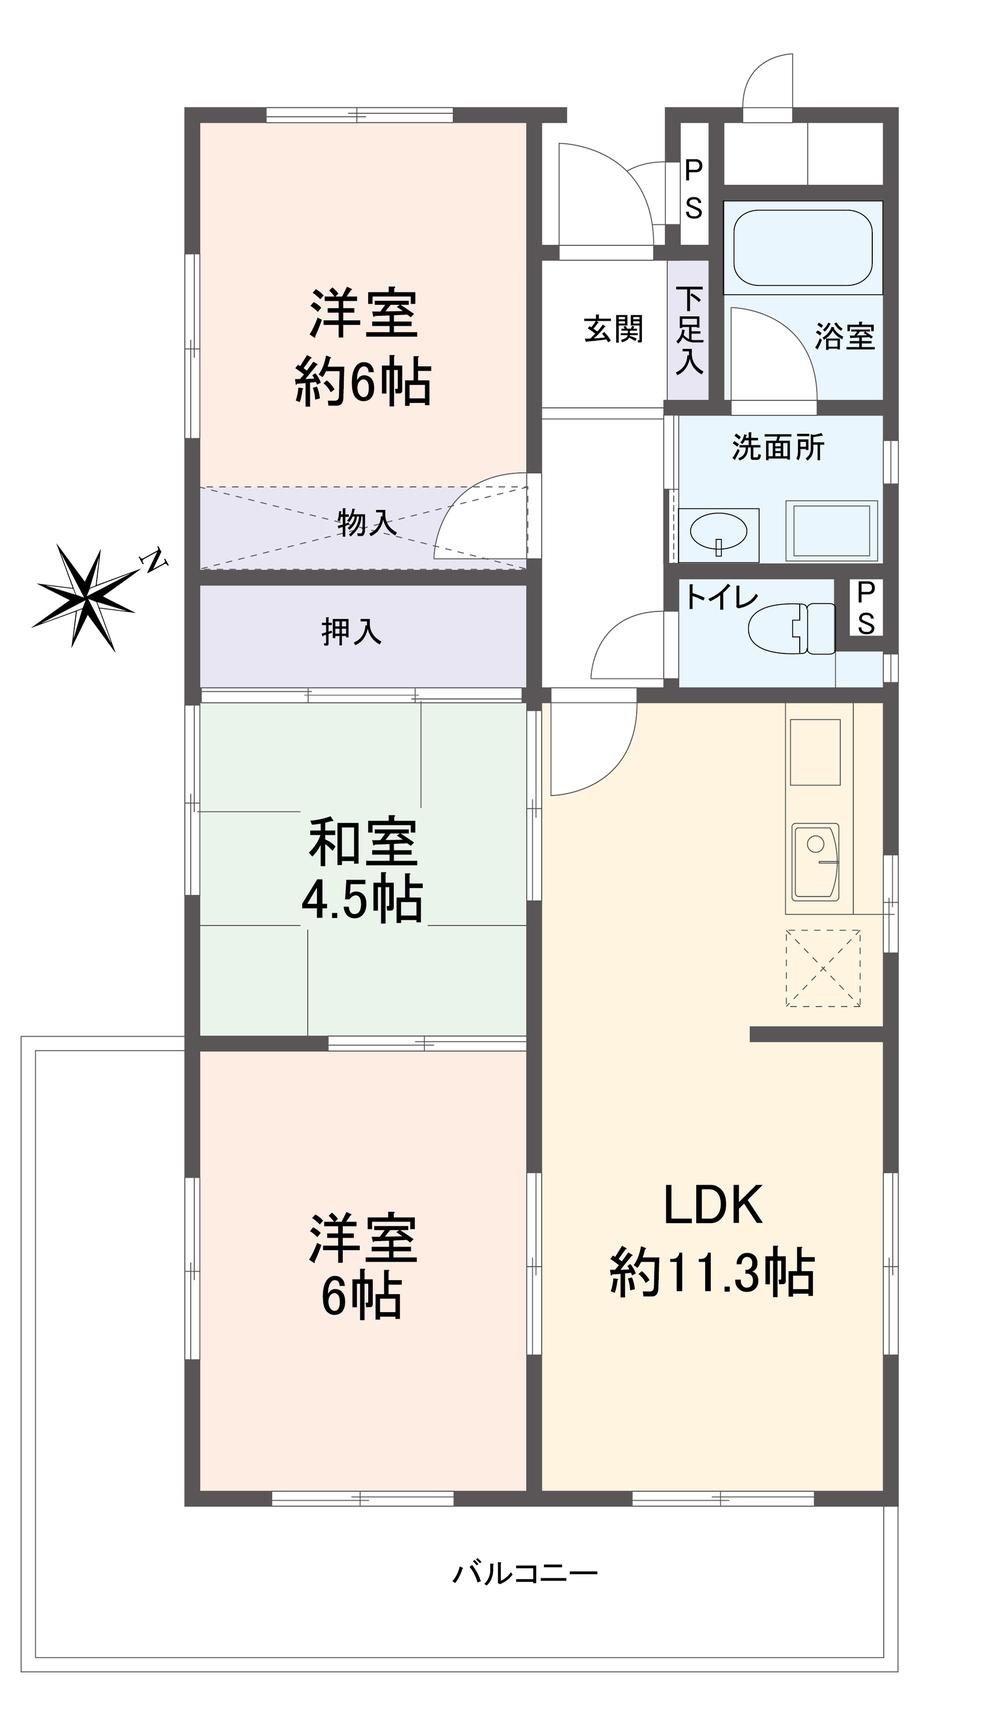 Floor plan. 3LDK, Price 7.9 million yen, Occupied area 62.99 sq m , Balcony area 14.11 sq m southeast, Spacious L-shaped balcony on the southwest side